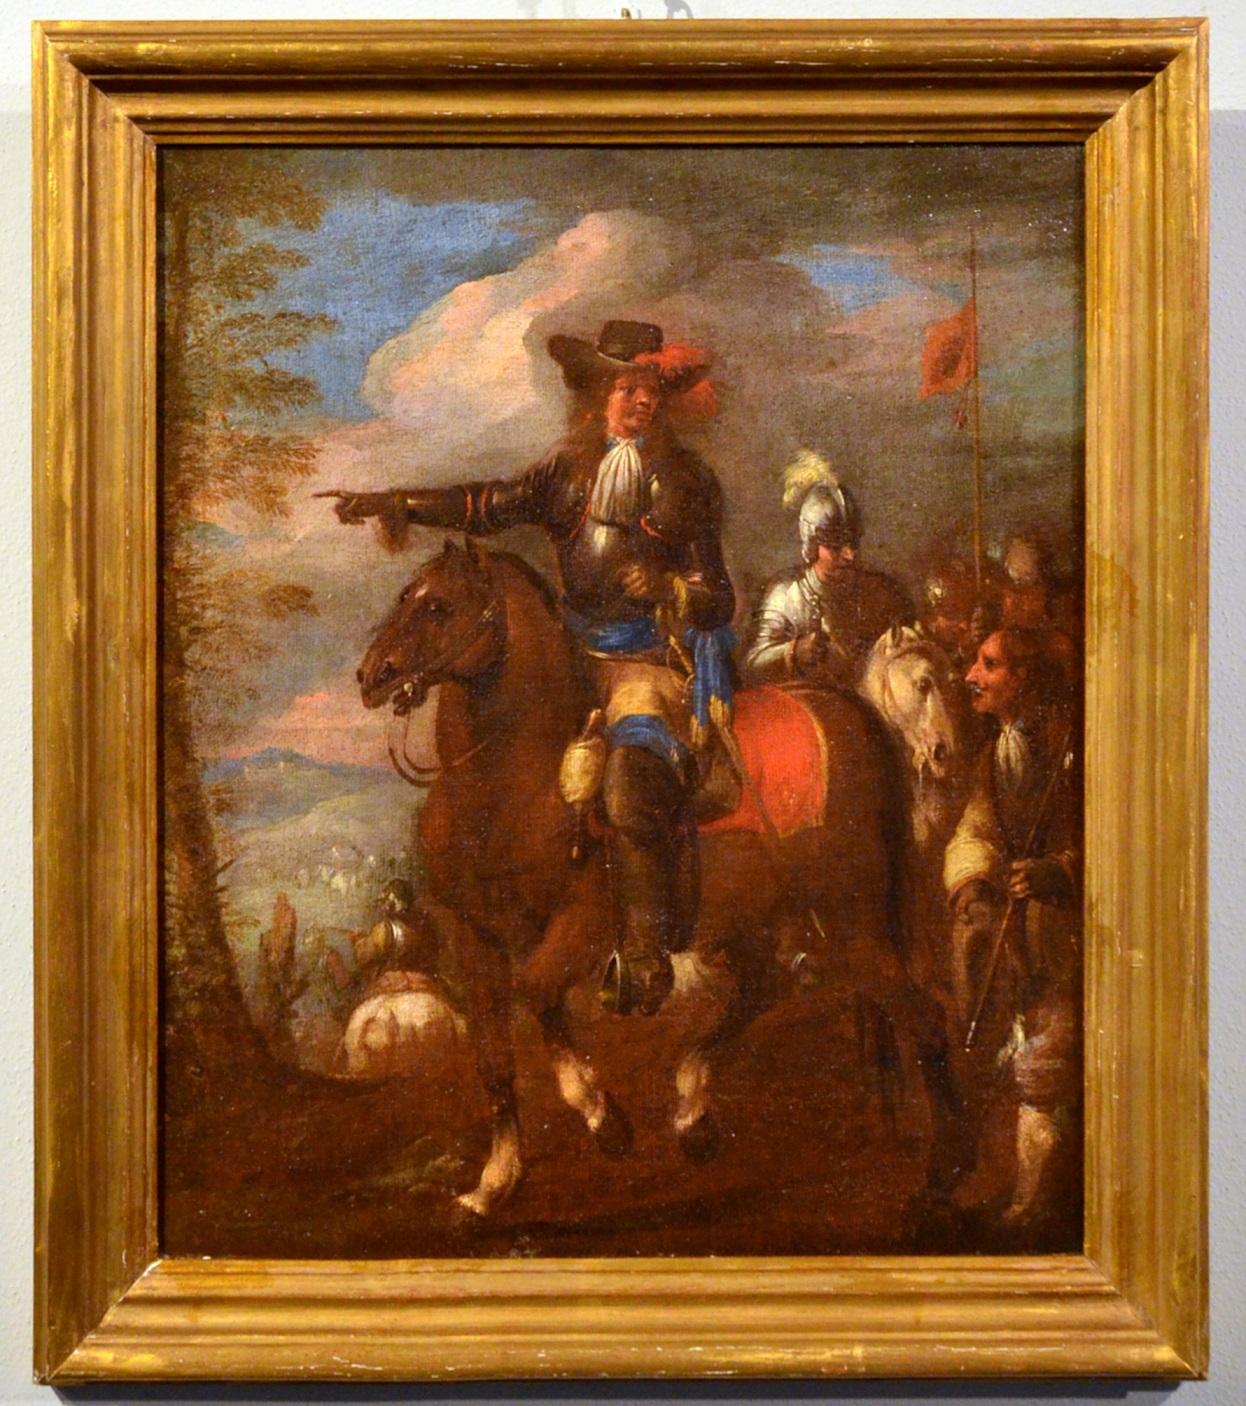 Knights Battle Paint Öl auf Leinwand 17/18th Century Italien Landschaft Alter Meister (Alte Meister), Painting, von Christian Reder known as Monsù Leandro (Leipzig 1656-Rome 1729)